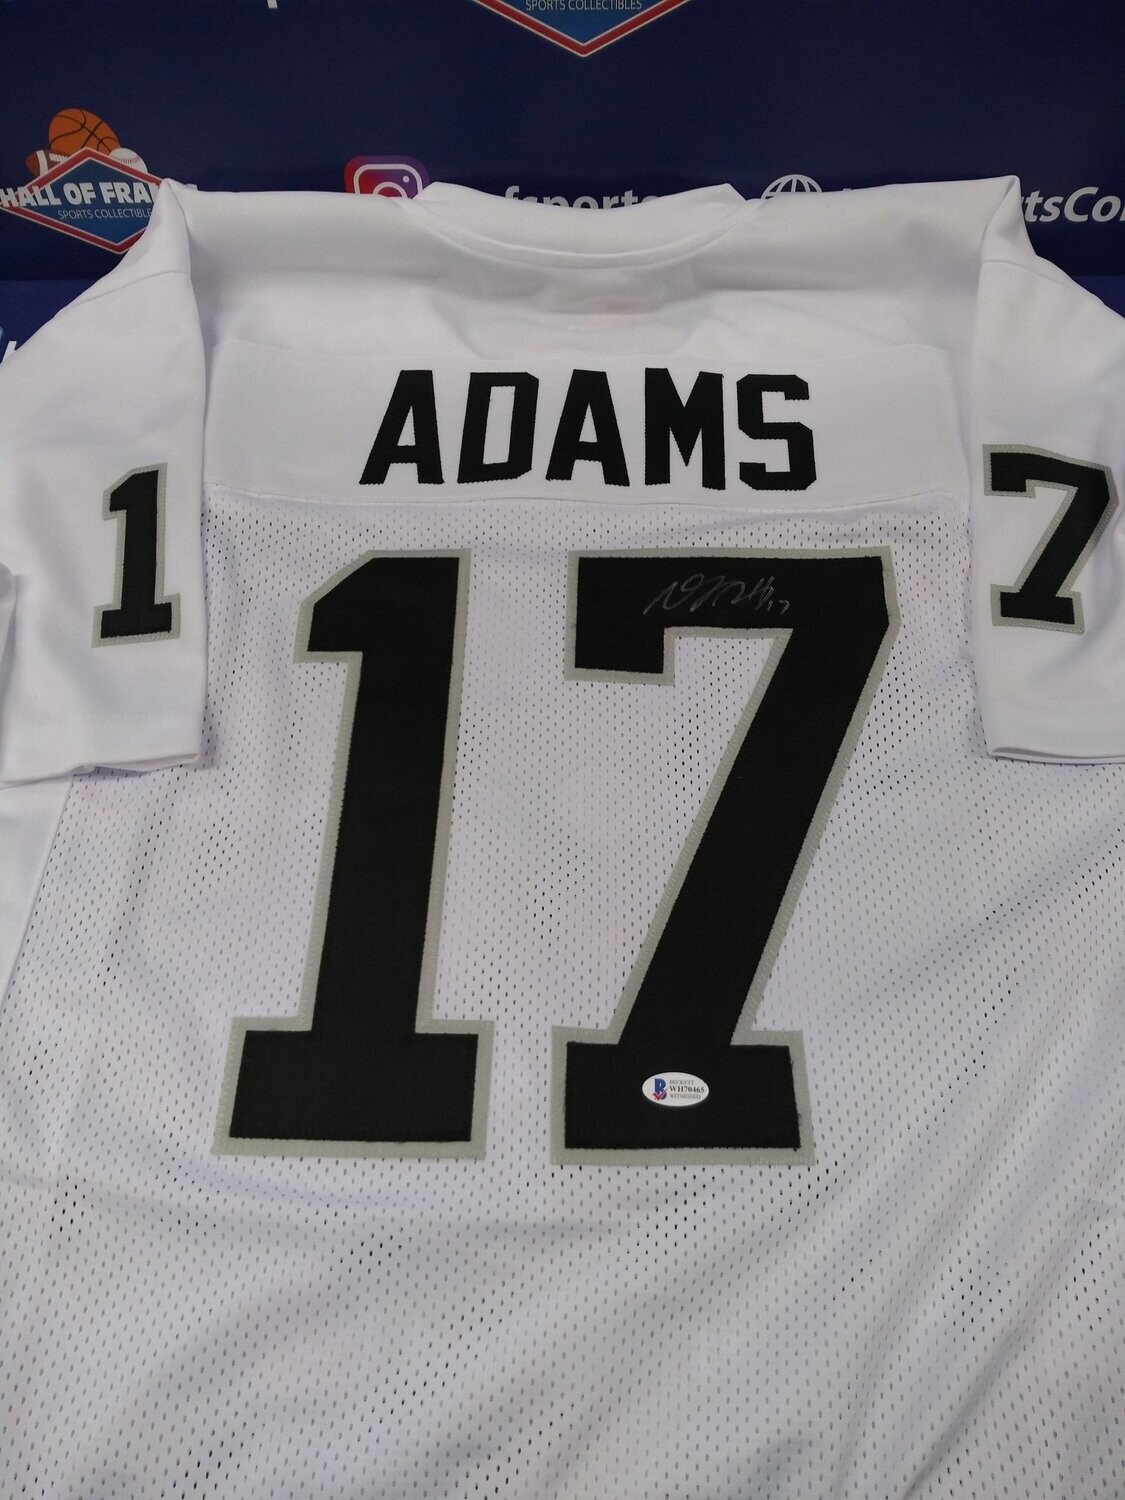 davante adams jersey signed